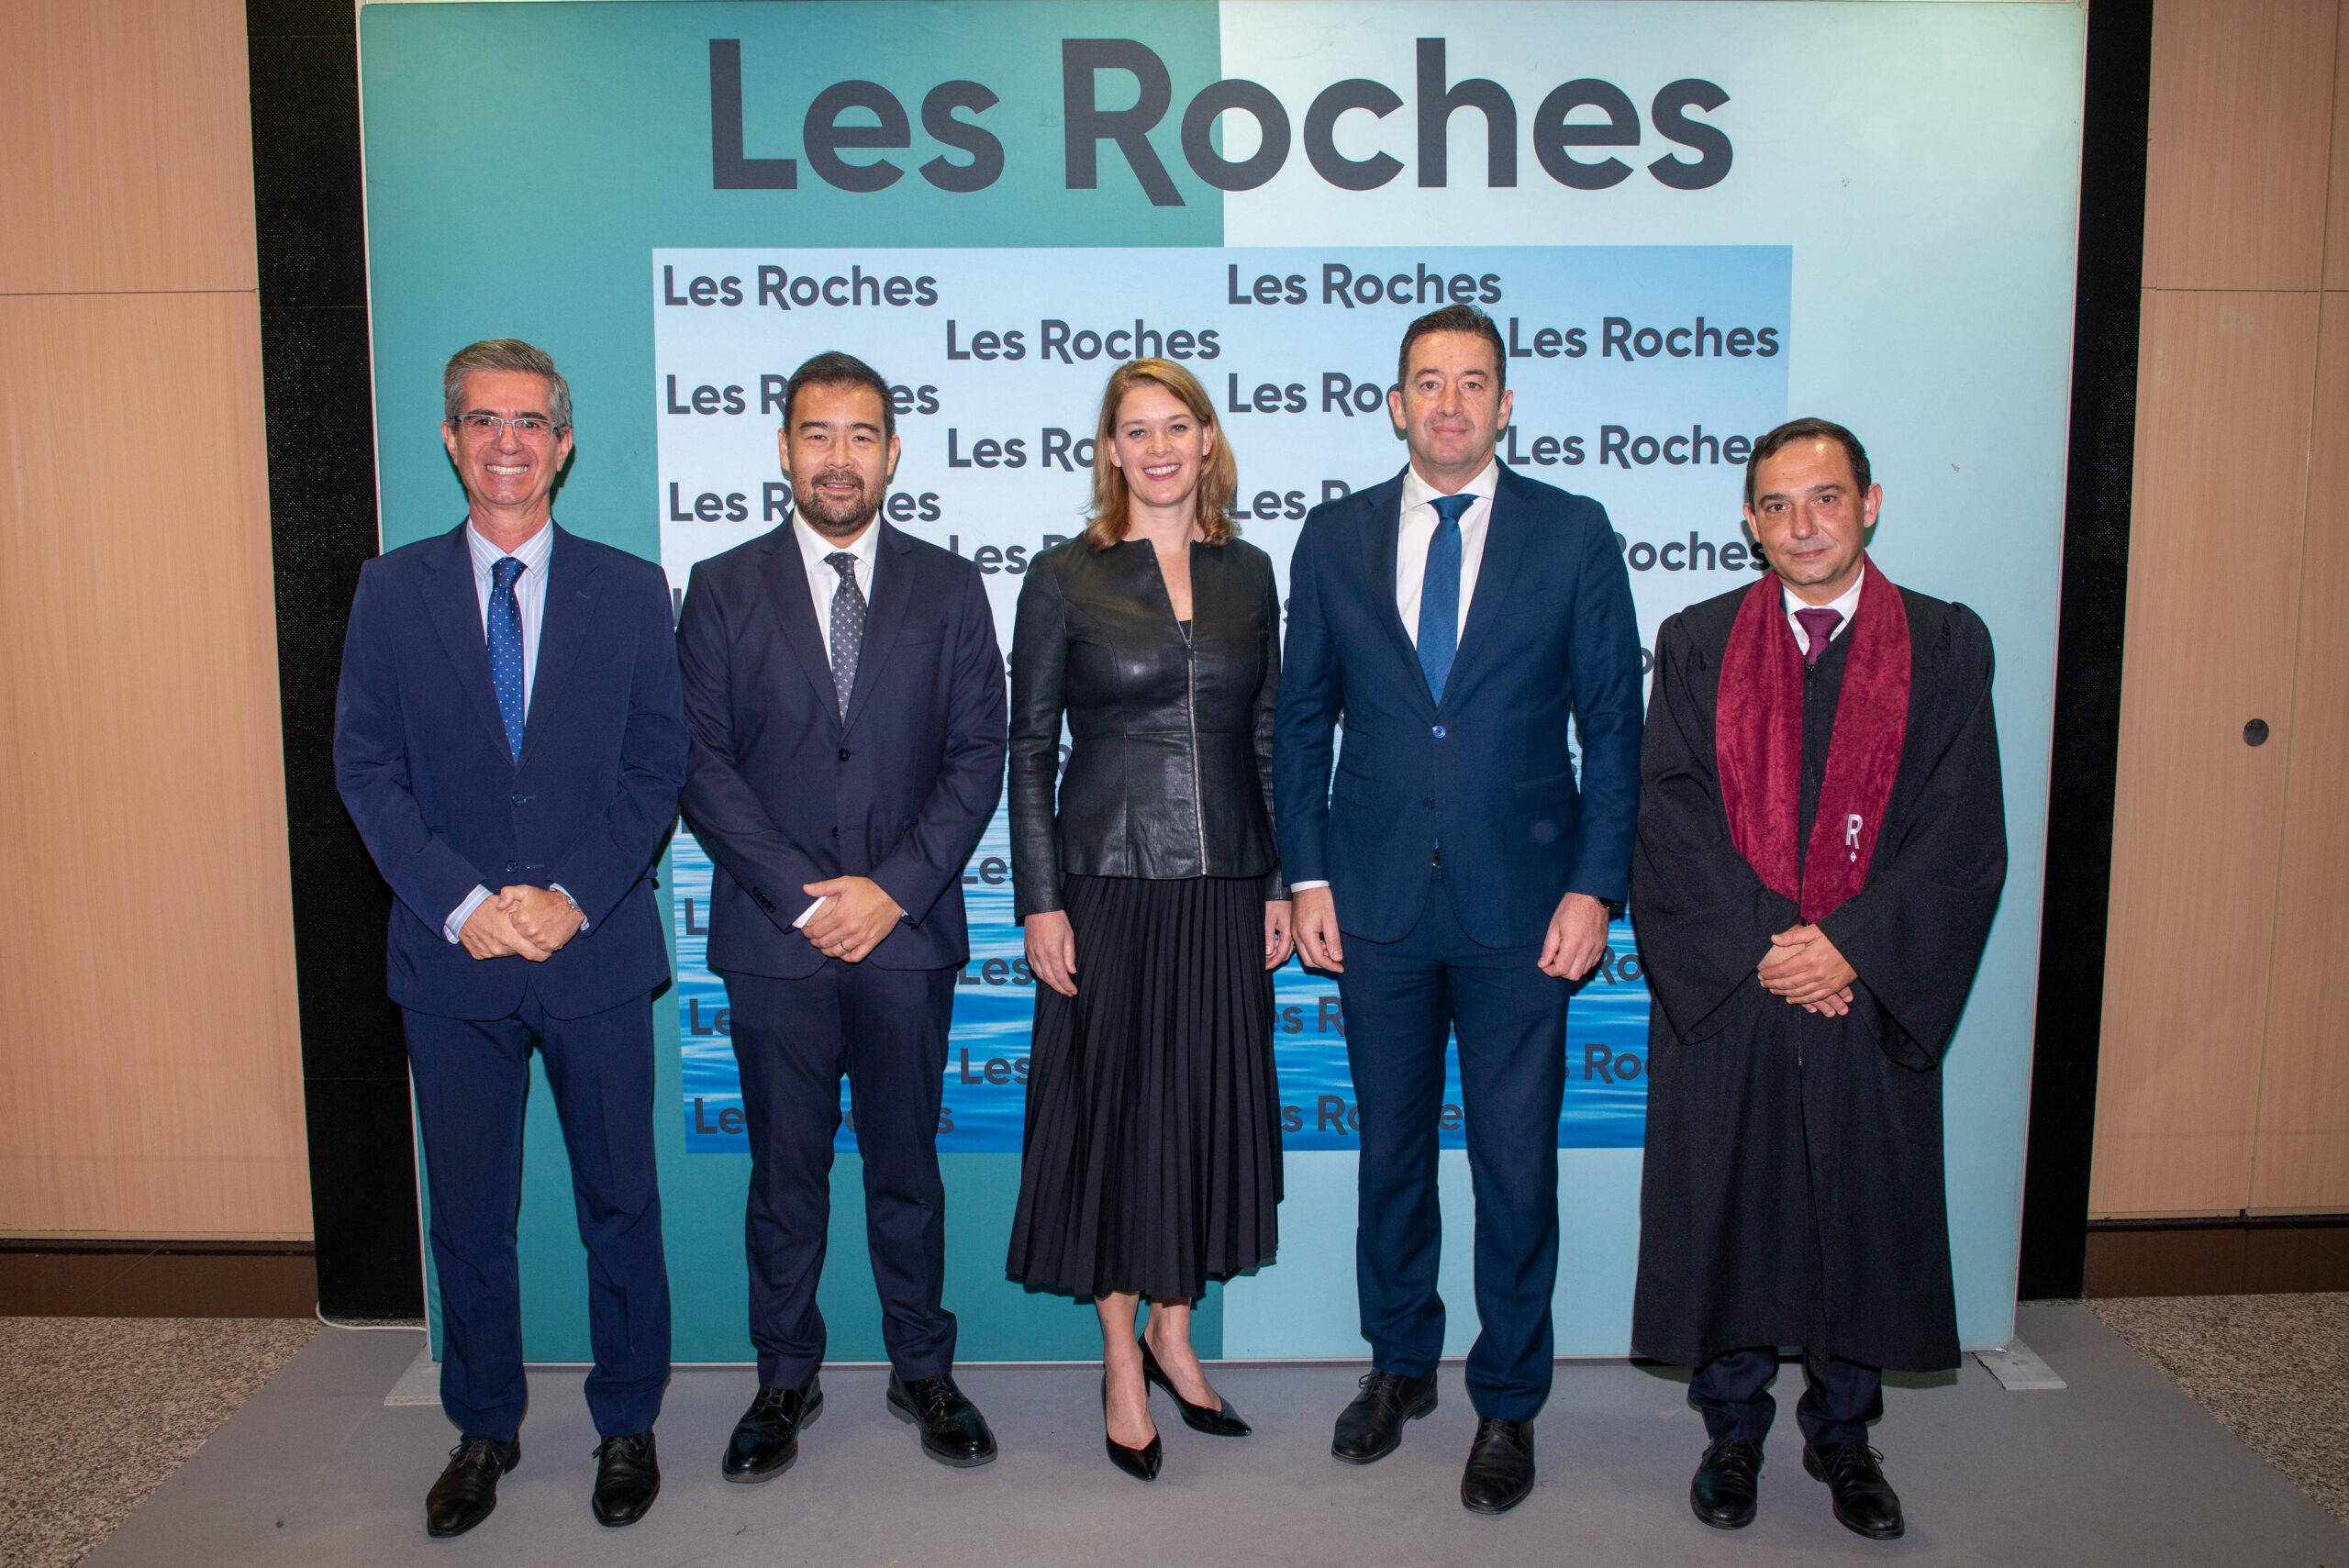 Les Roches Marbella gradúa a 193 alumnos y premia a Hyatt Hotels con el “Hospitality Young Talent Award”